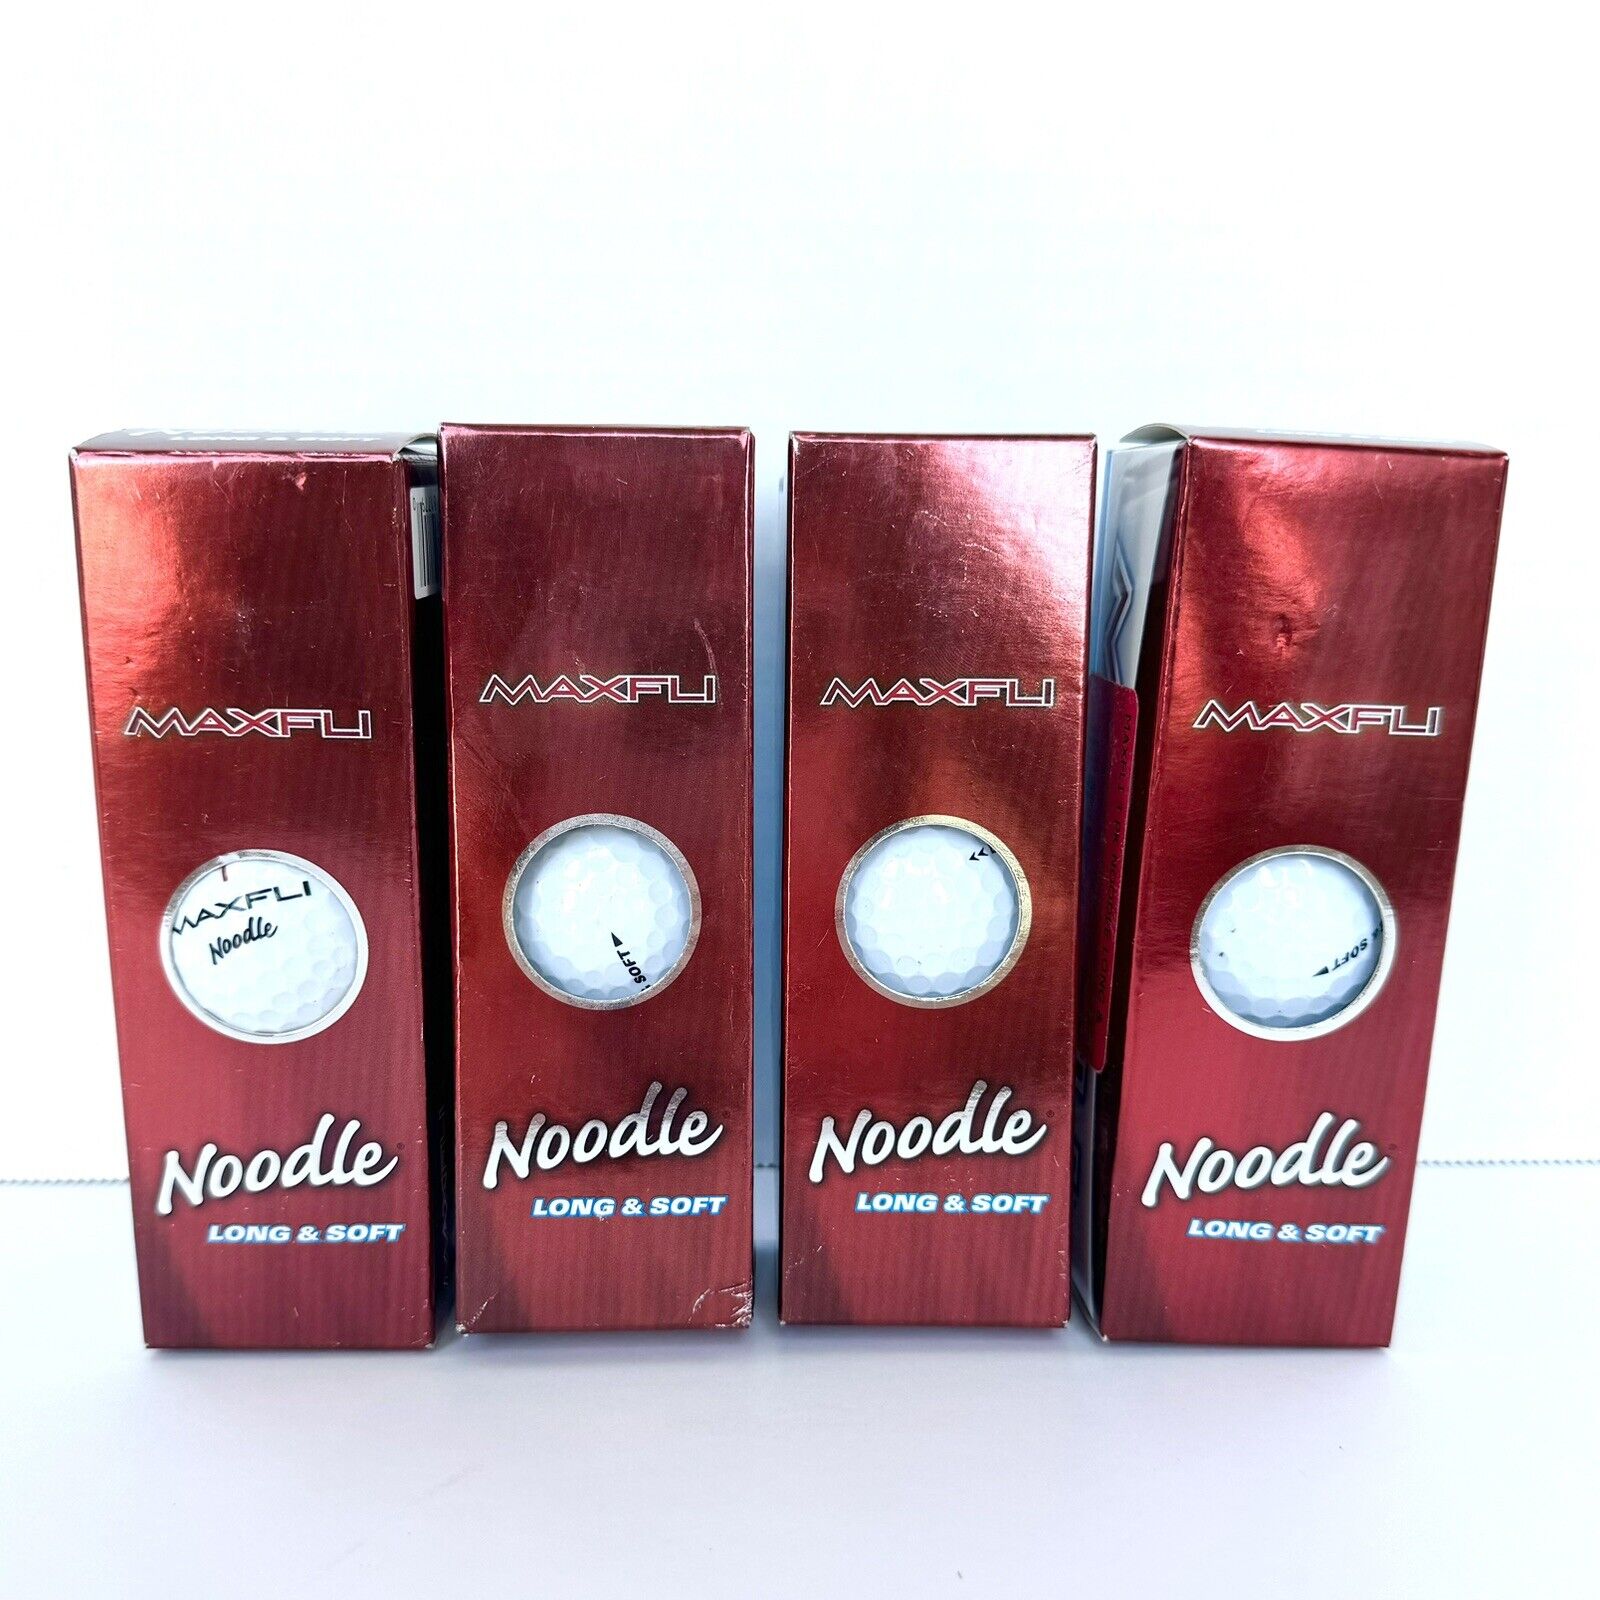 New NIB 4 Packs of 3 MAXFLI Noodle Long & Soft Golf Balls - 12 Balls Total